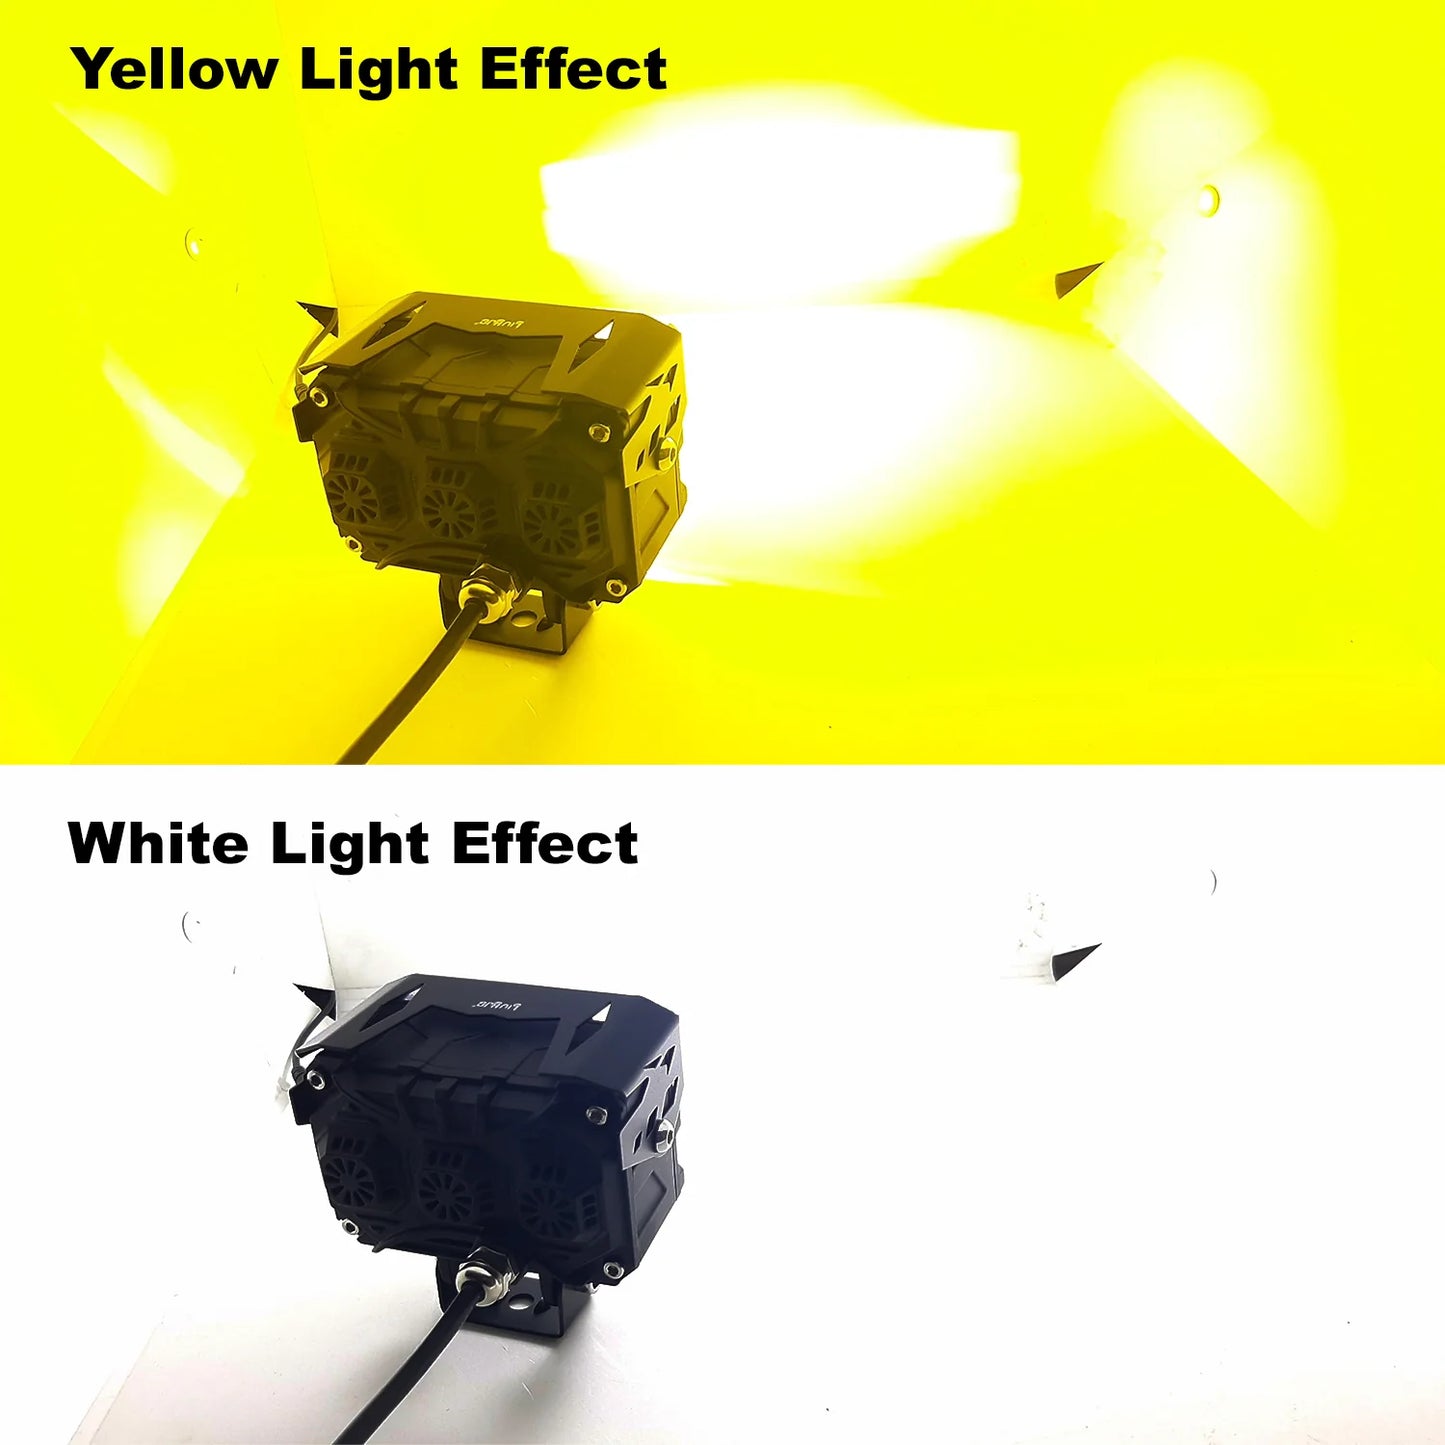 HJG ORIGINAL 180W 6 Future Lens MEGA DRIVE Fog Light For Bike/Car/Thar/Jeep ( Cool White, 90W each * 2 = 180W Total ) - Pack of 2